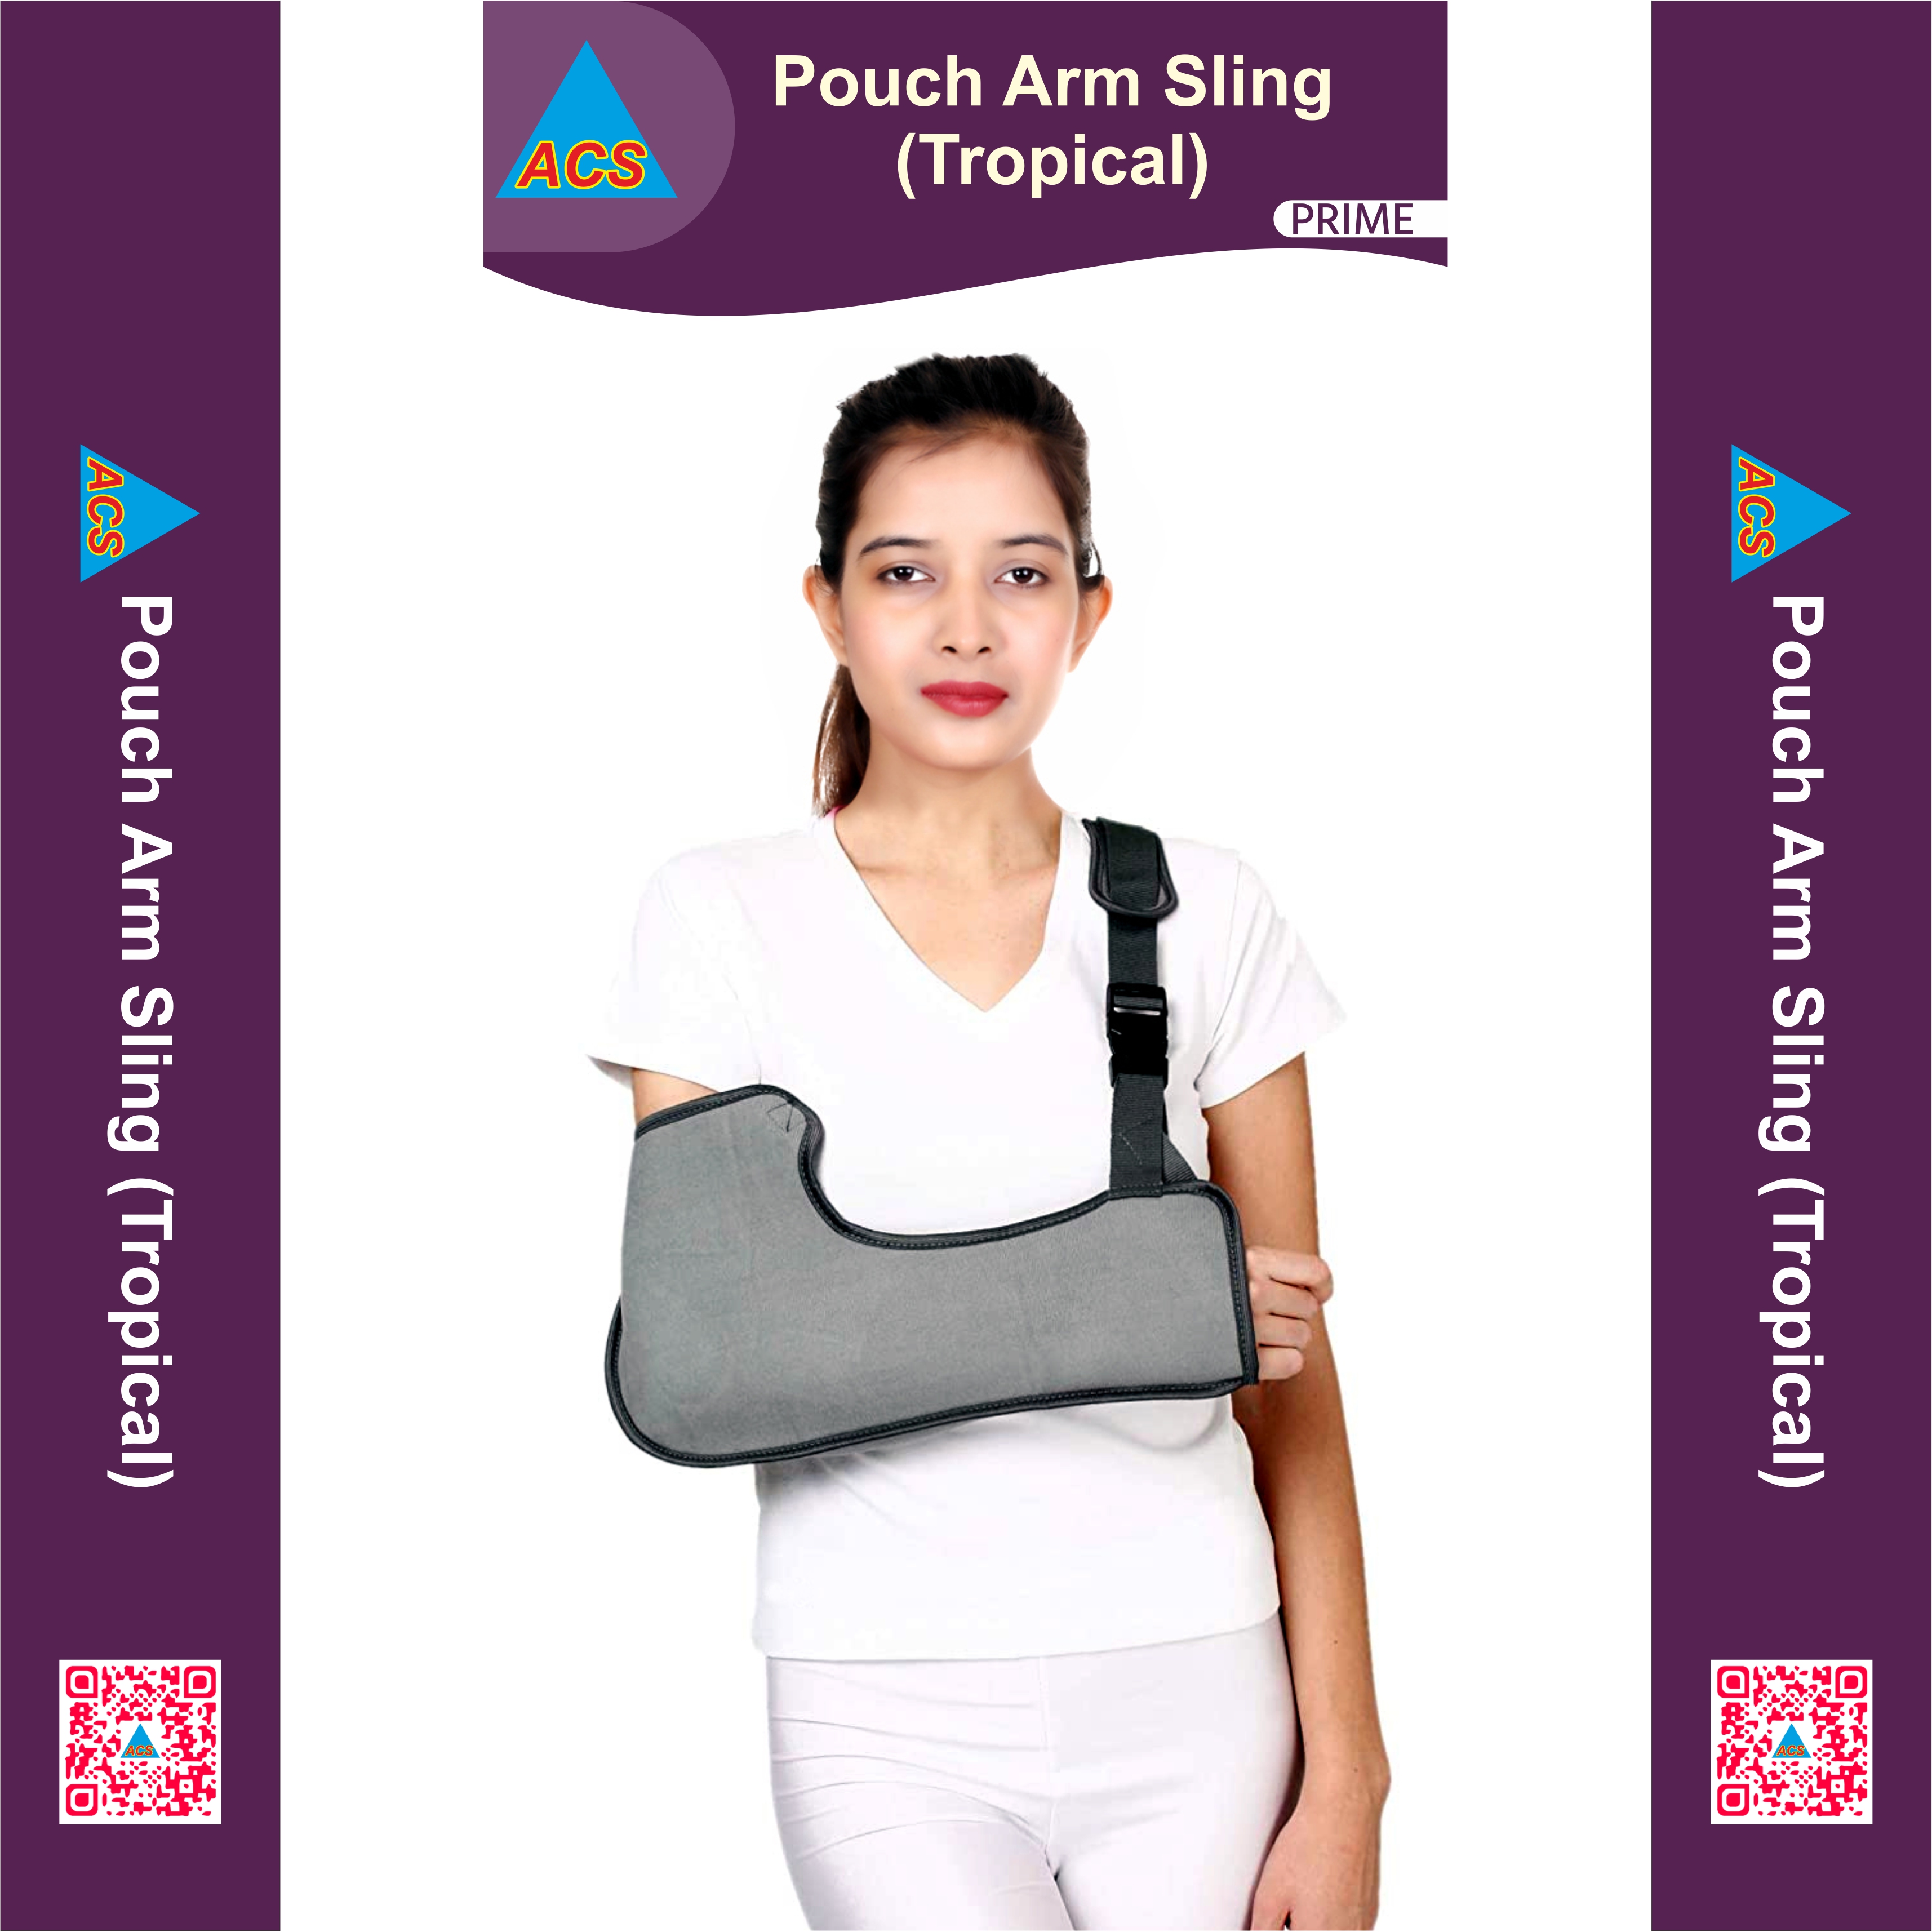 ACS Pouch Arm Sling (Tropical) Prime  - 901 